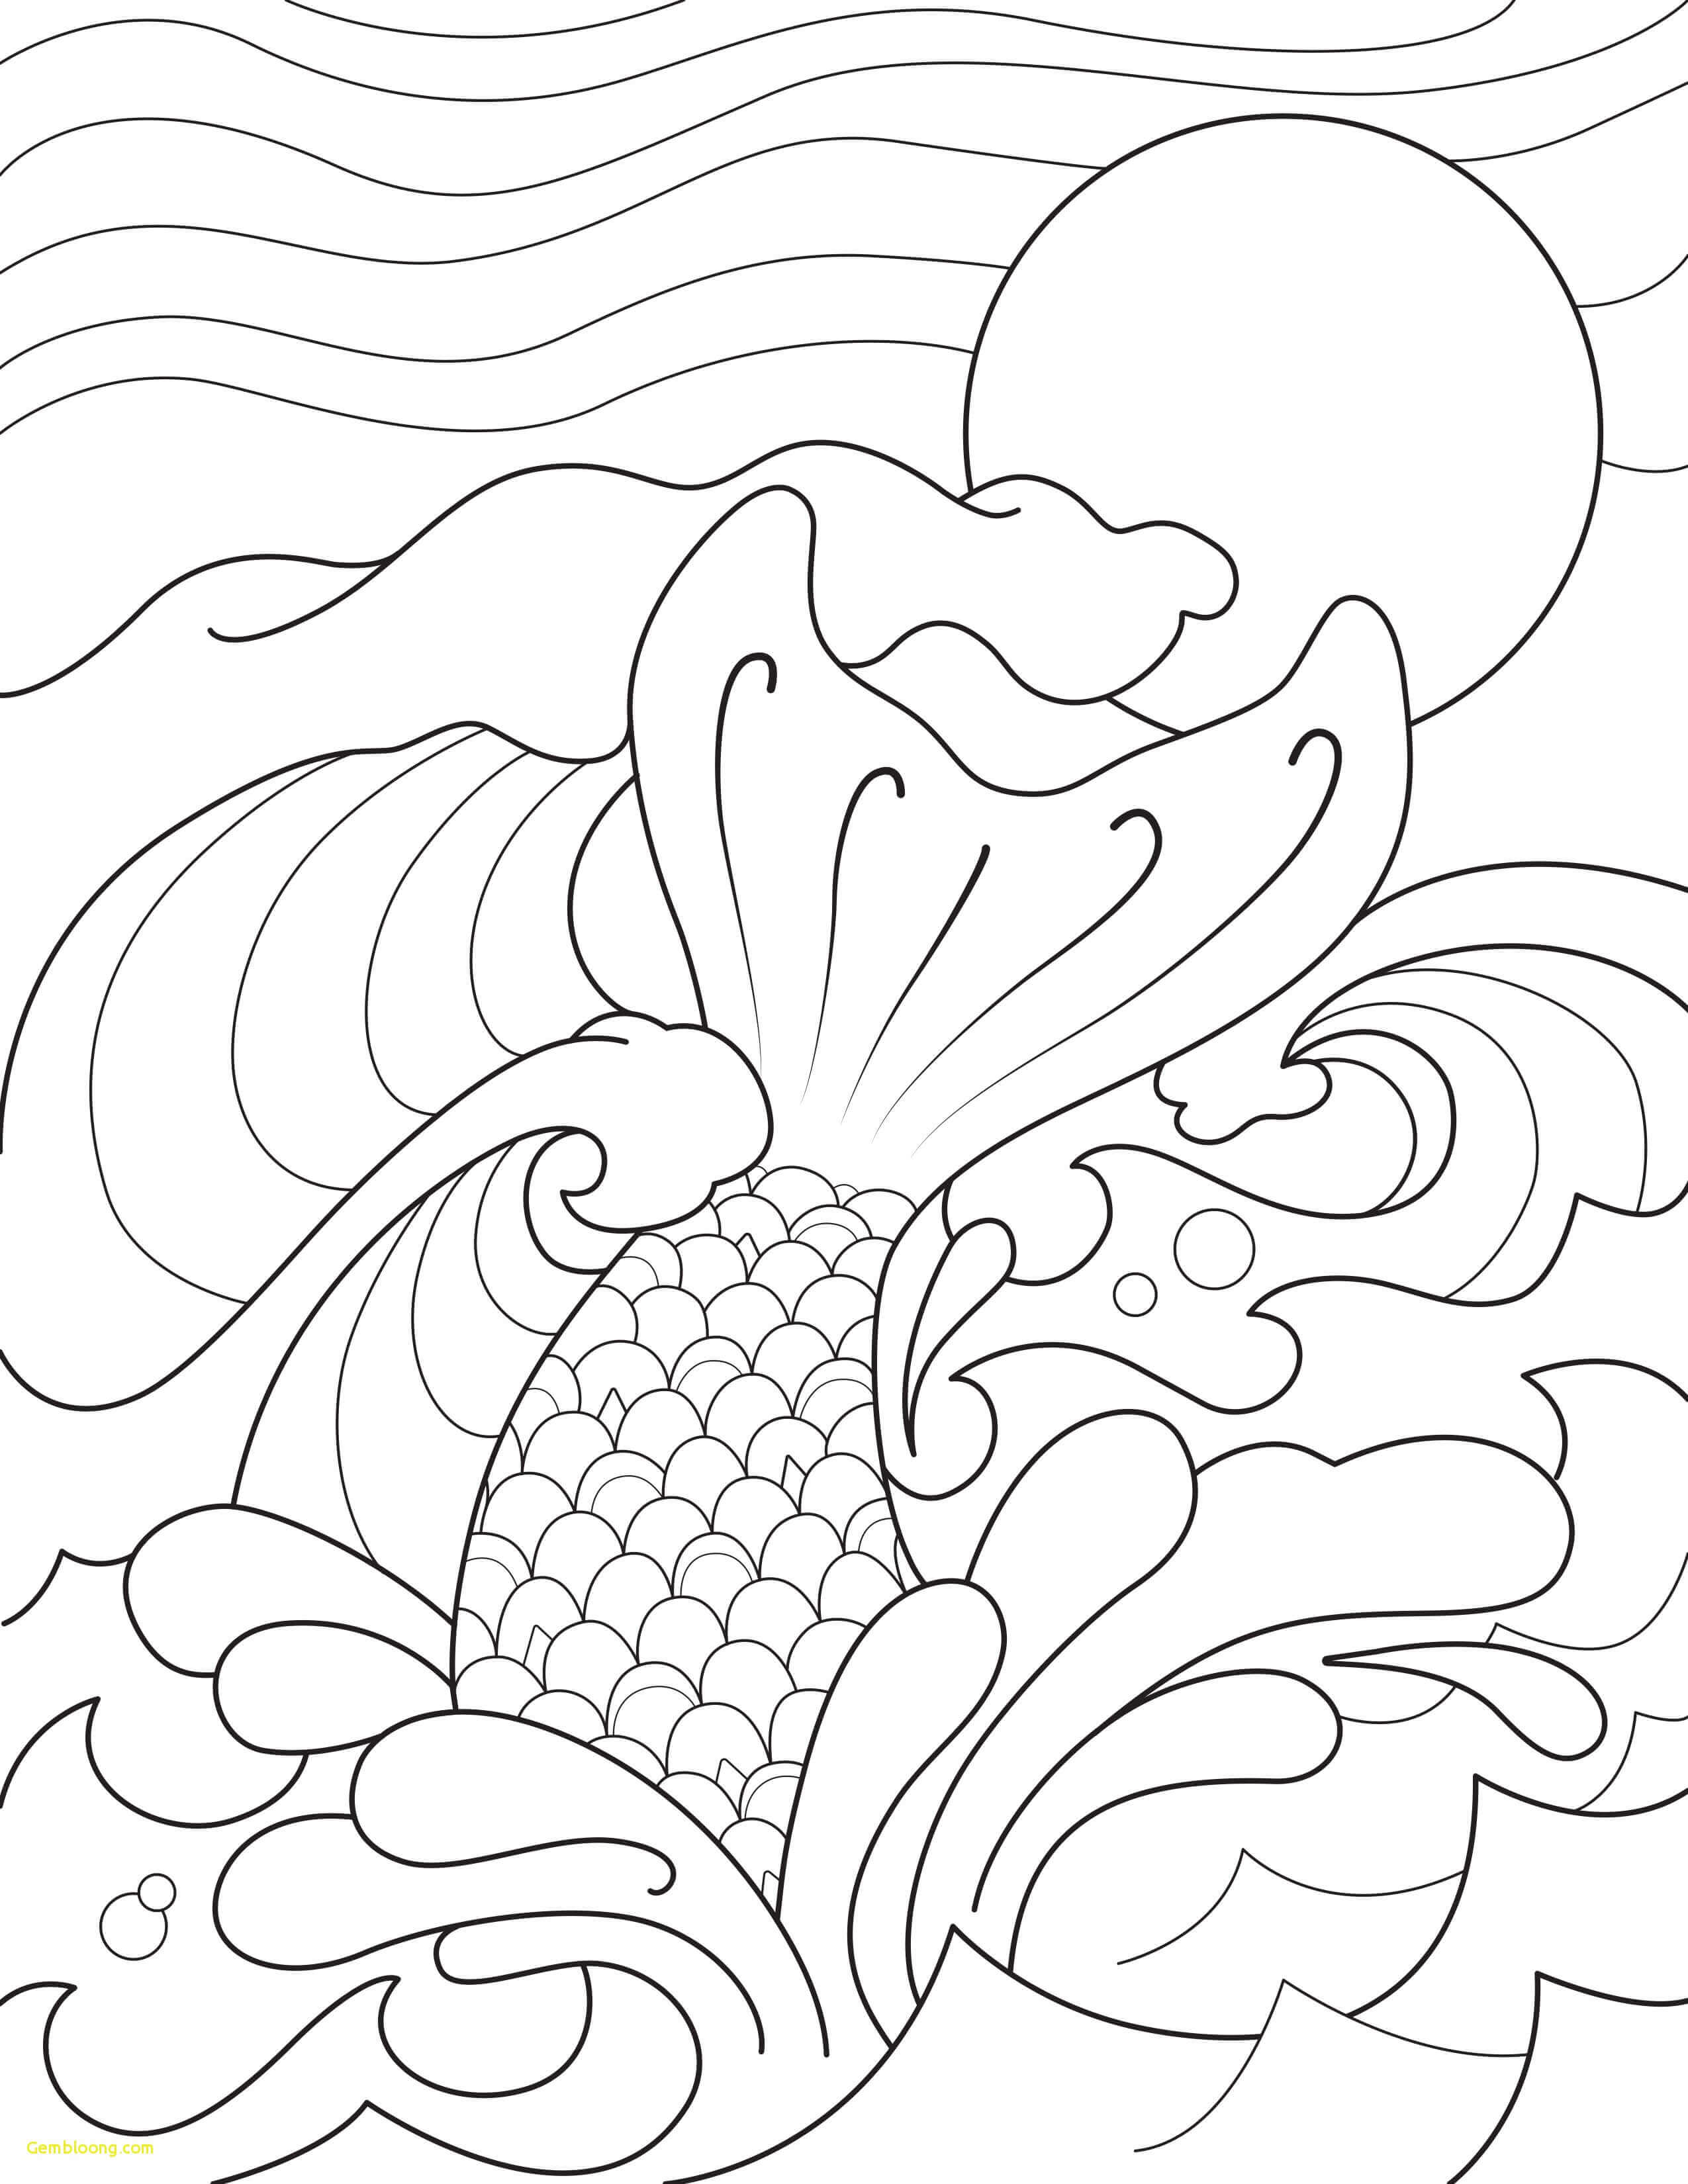 Mermaid Coloring Pages - coloring.rocks!